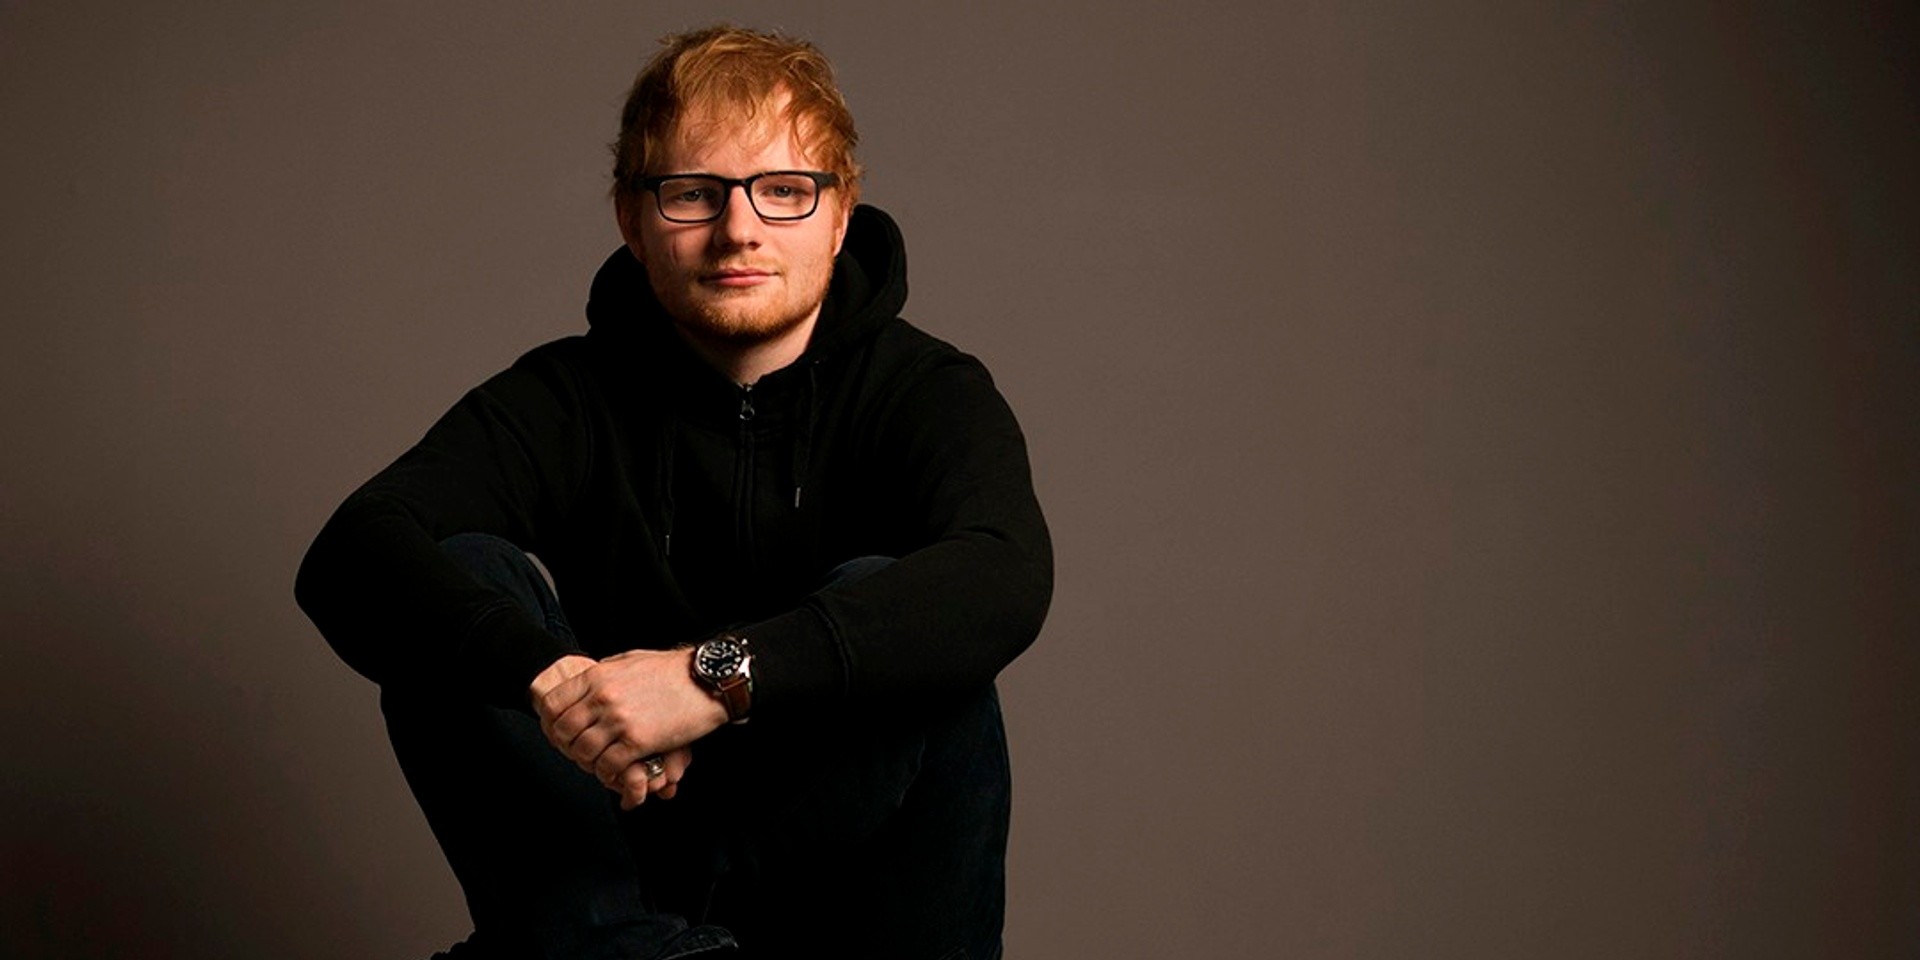 Ed Sheeran is coming to Manila this year